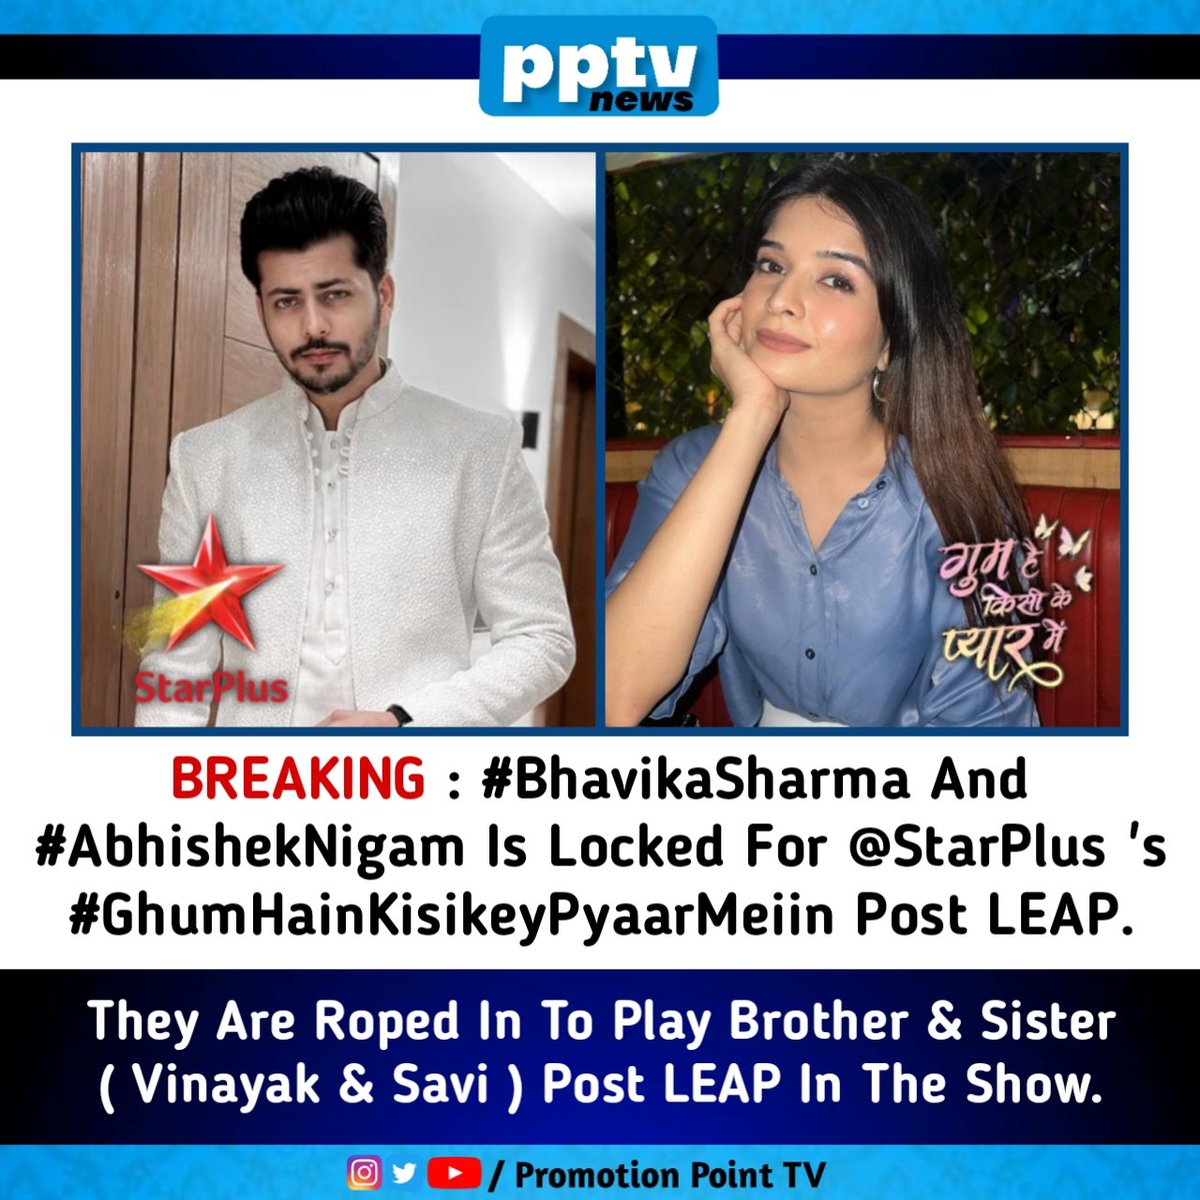 #SuperExclusive

BREAKING : #BhavikaSharma And #AbhishekNigam Is Locked For #StarPlus 's #GhumHainKisikeyPyaarMeiin Post LEAP. 

@PPtvOfficial EXCLUSIVE